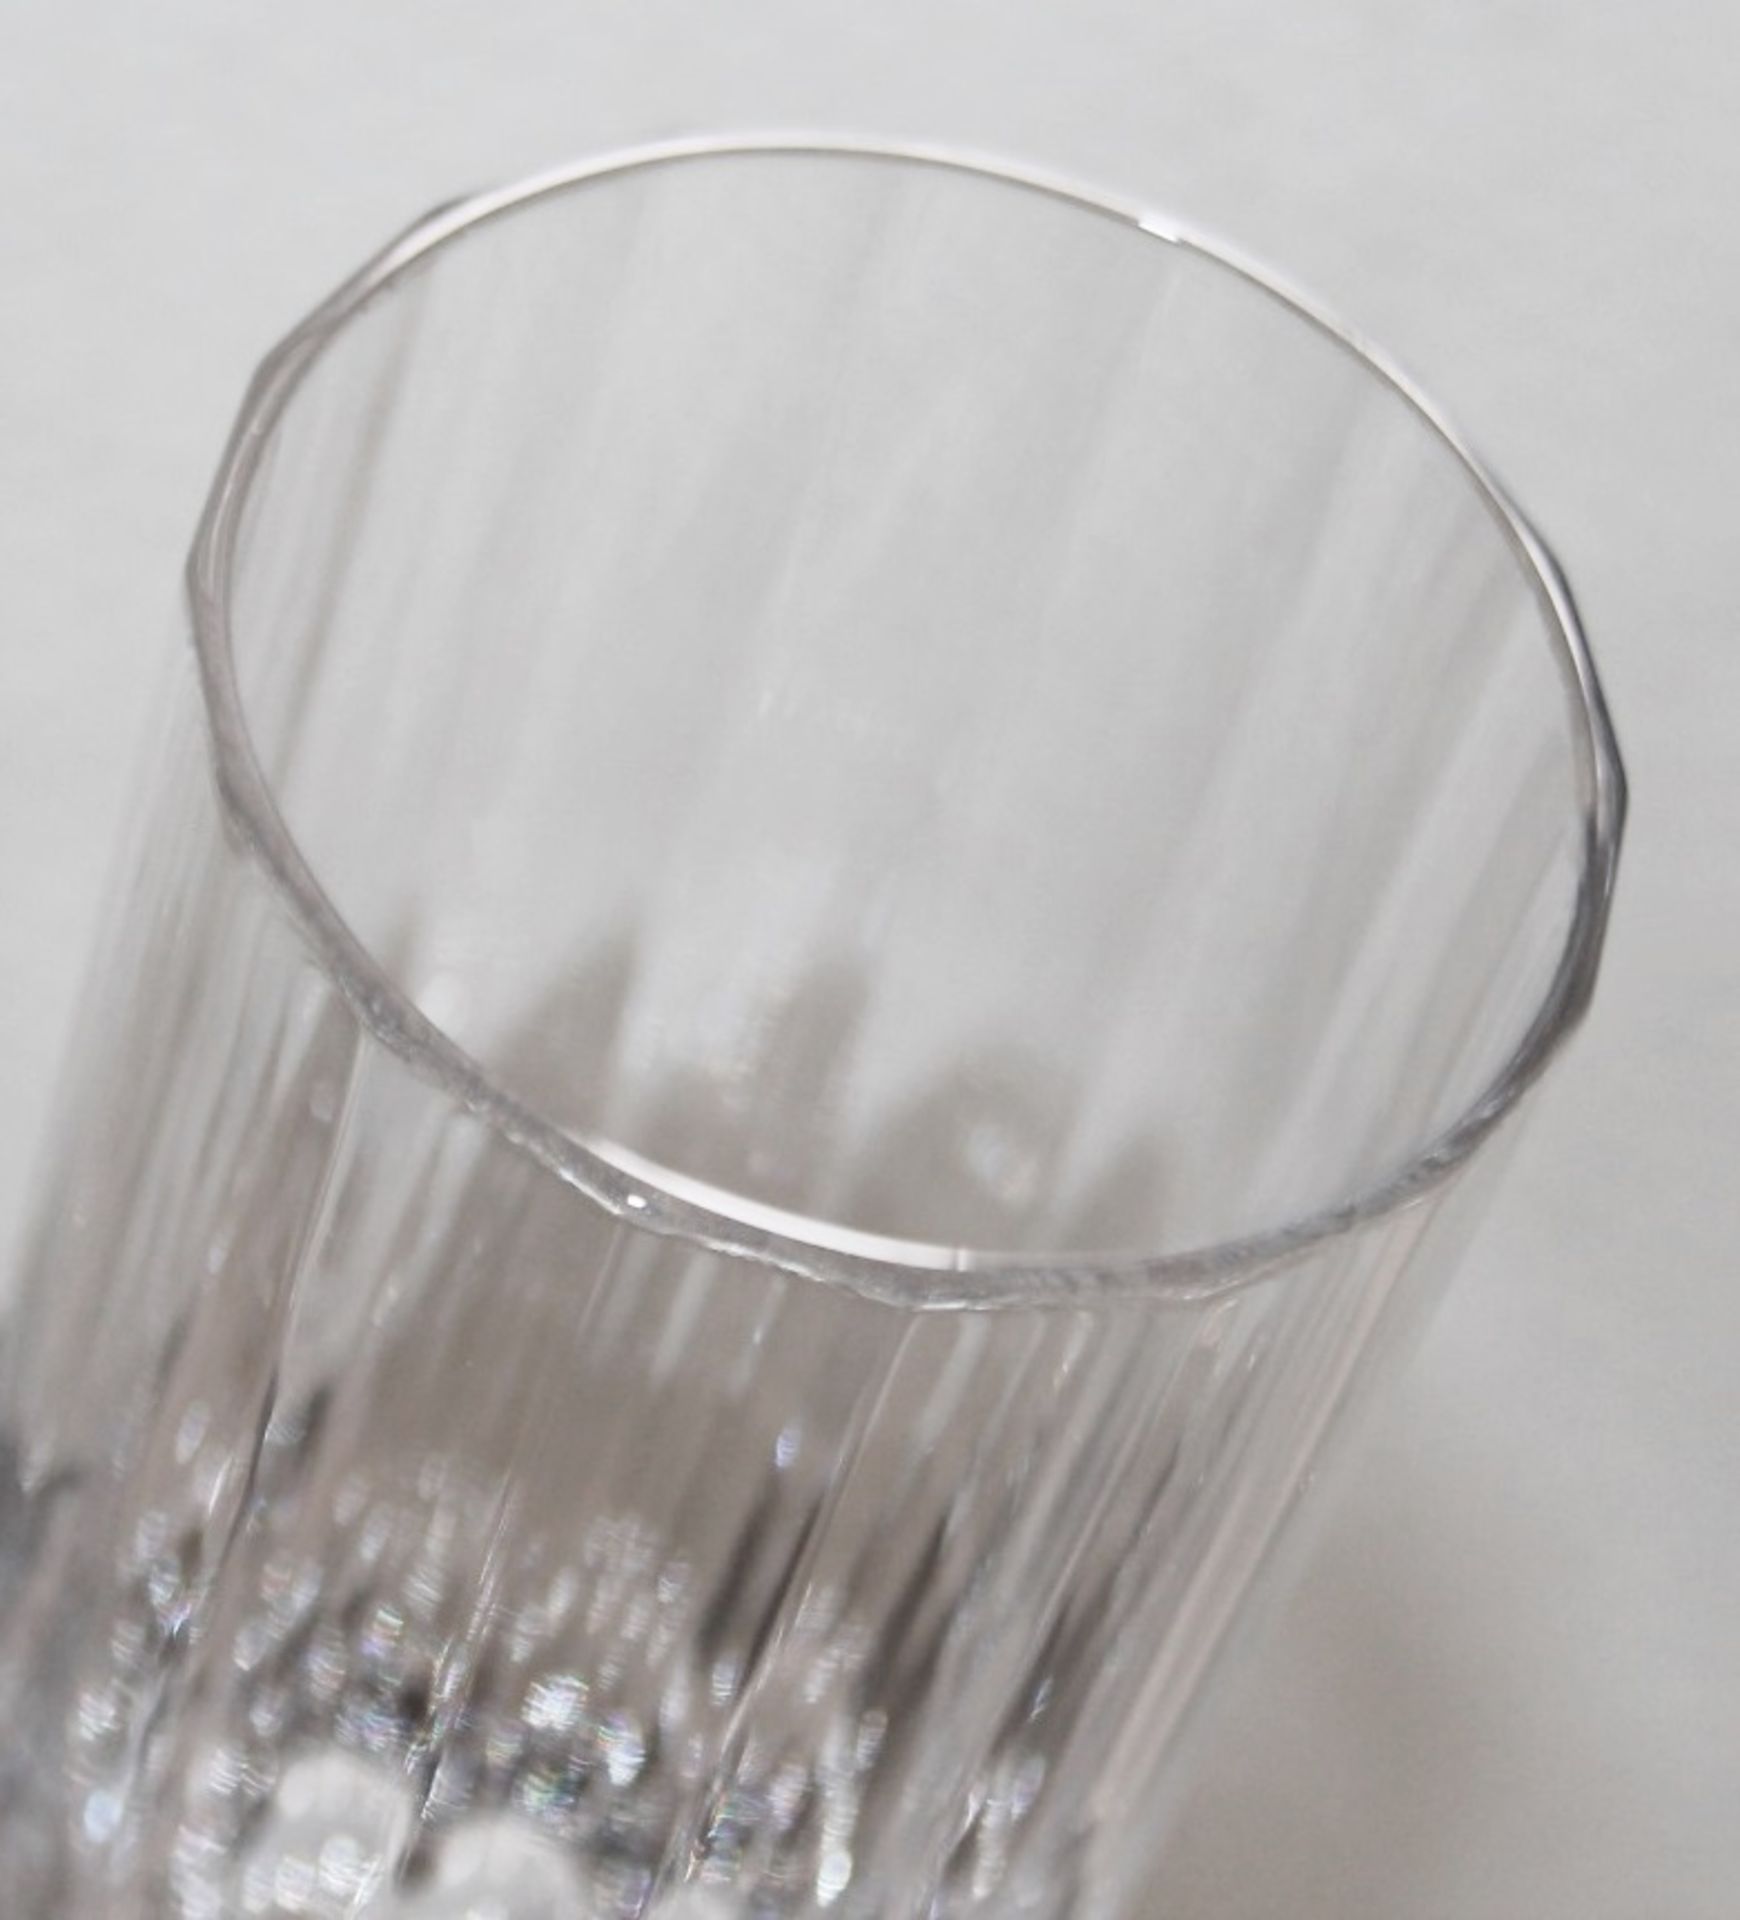 1 x RICHARD BRENDON Fluted Handmade Crystal Highball Glass (380ml) - Original Price £90.00 - Image 7 of 9